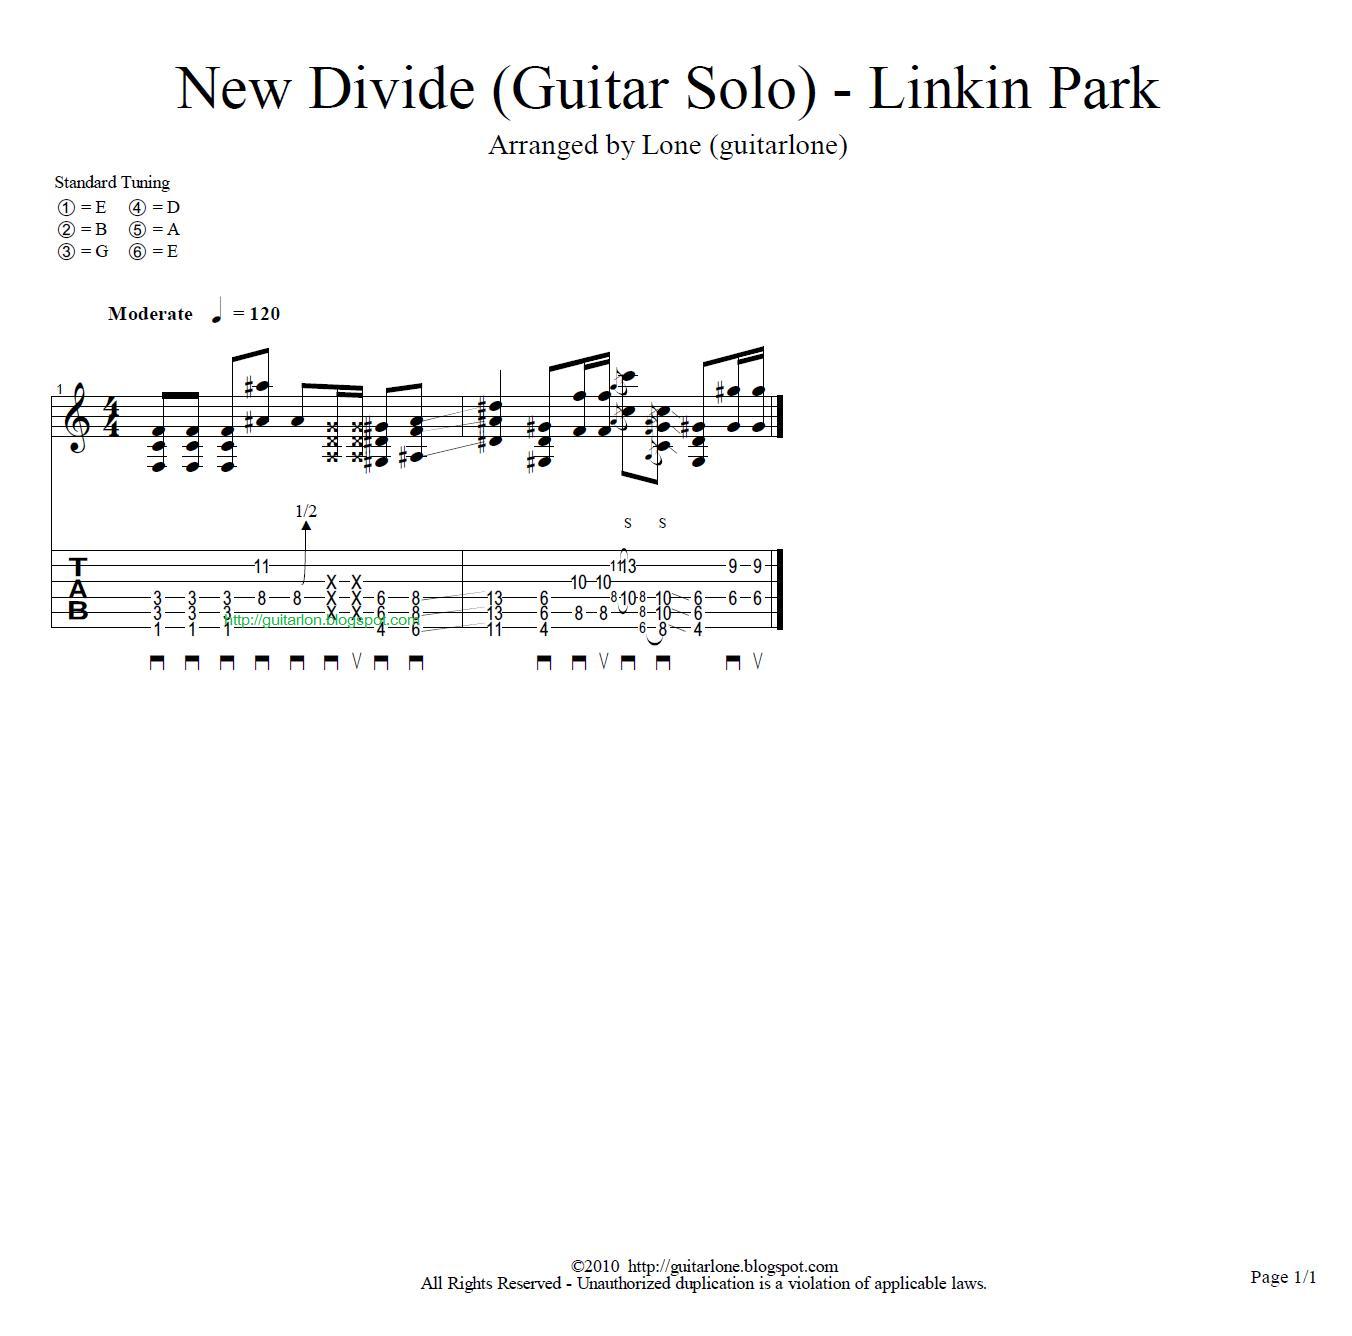 New divide текст. Linkin Park New Divide табы. Линкин парк на укулеле табы. Линкин парк на гитаре табы. Гитара Linkin Park.